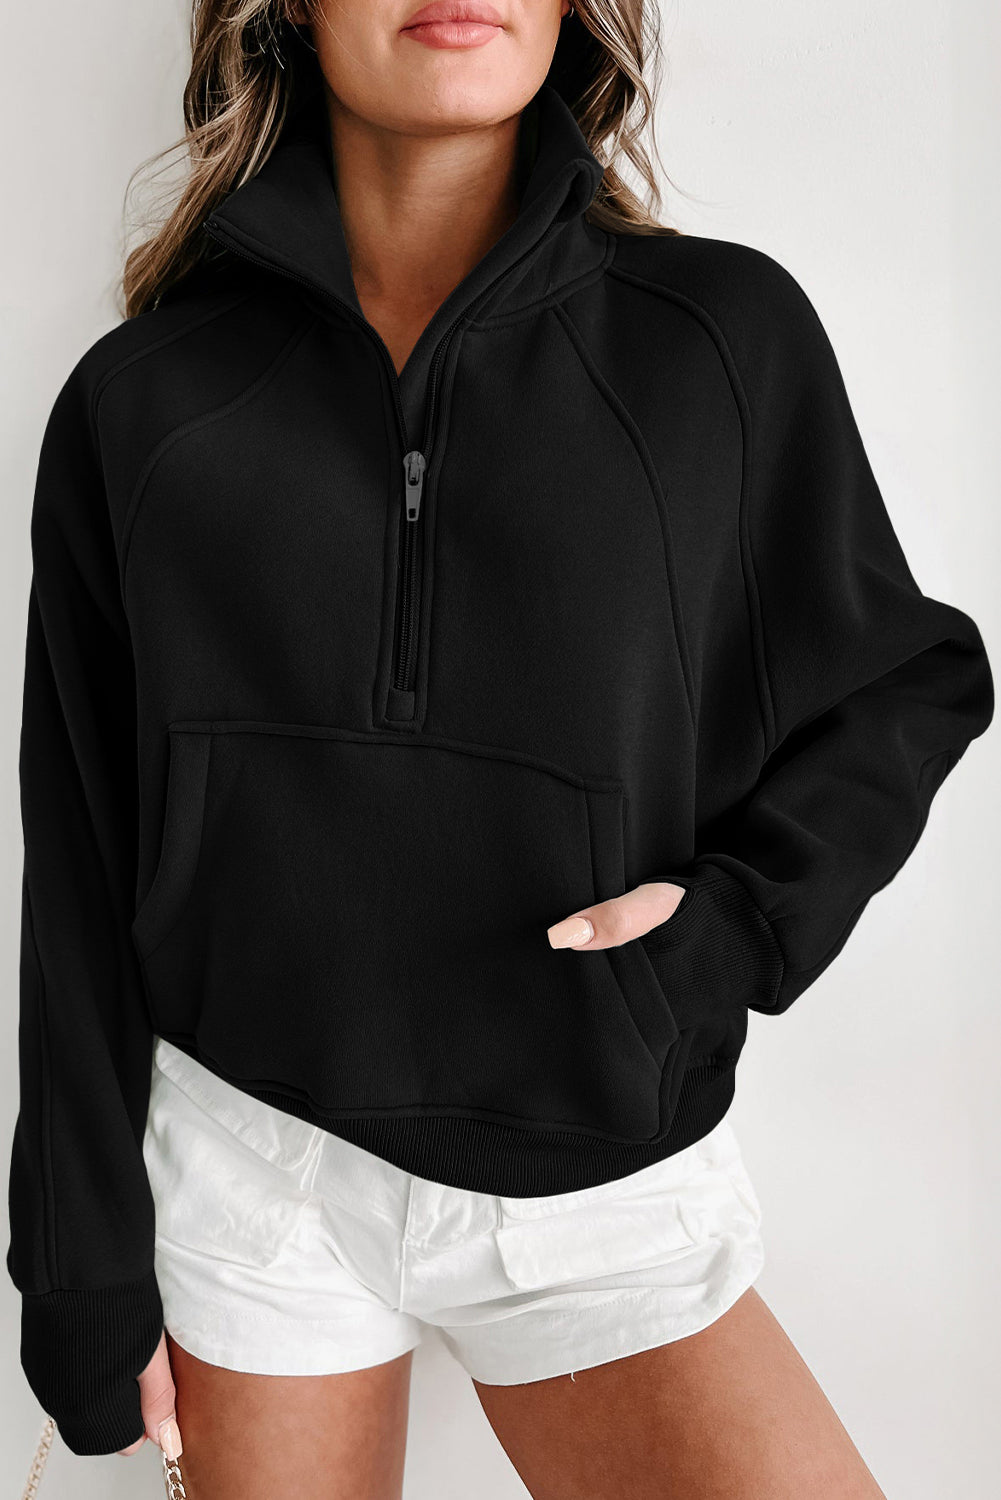 Lulu. Stand Collar Sweatshirts Fleece Half Zipper Loose Sport Coat